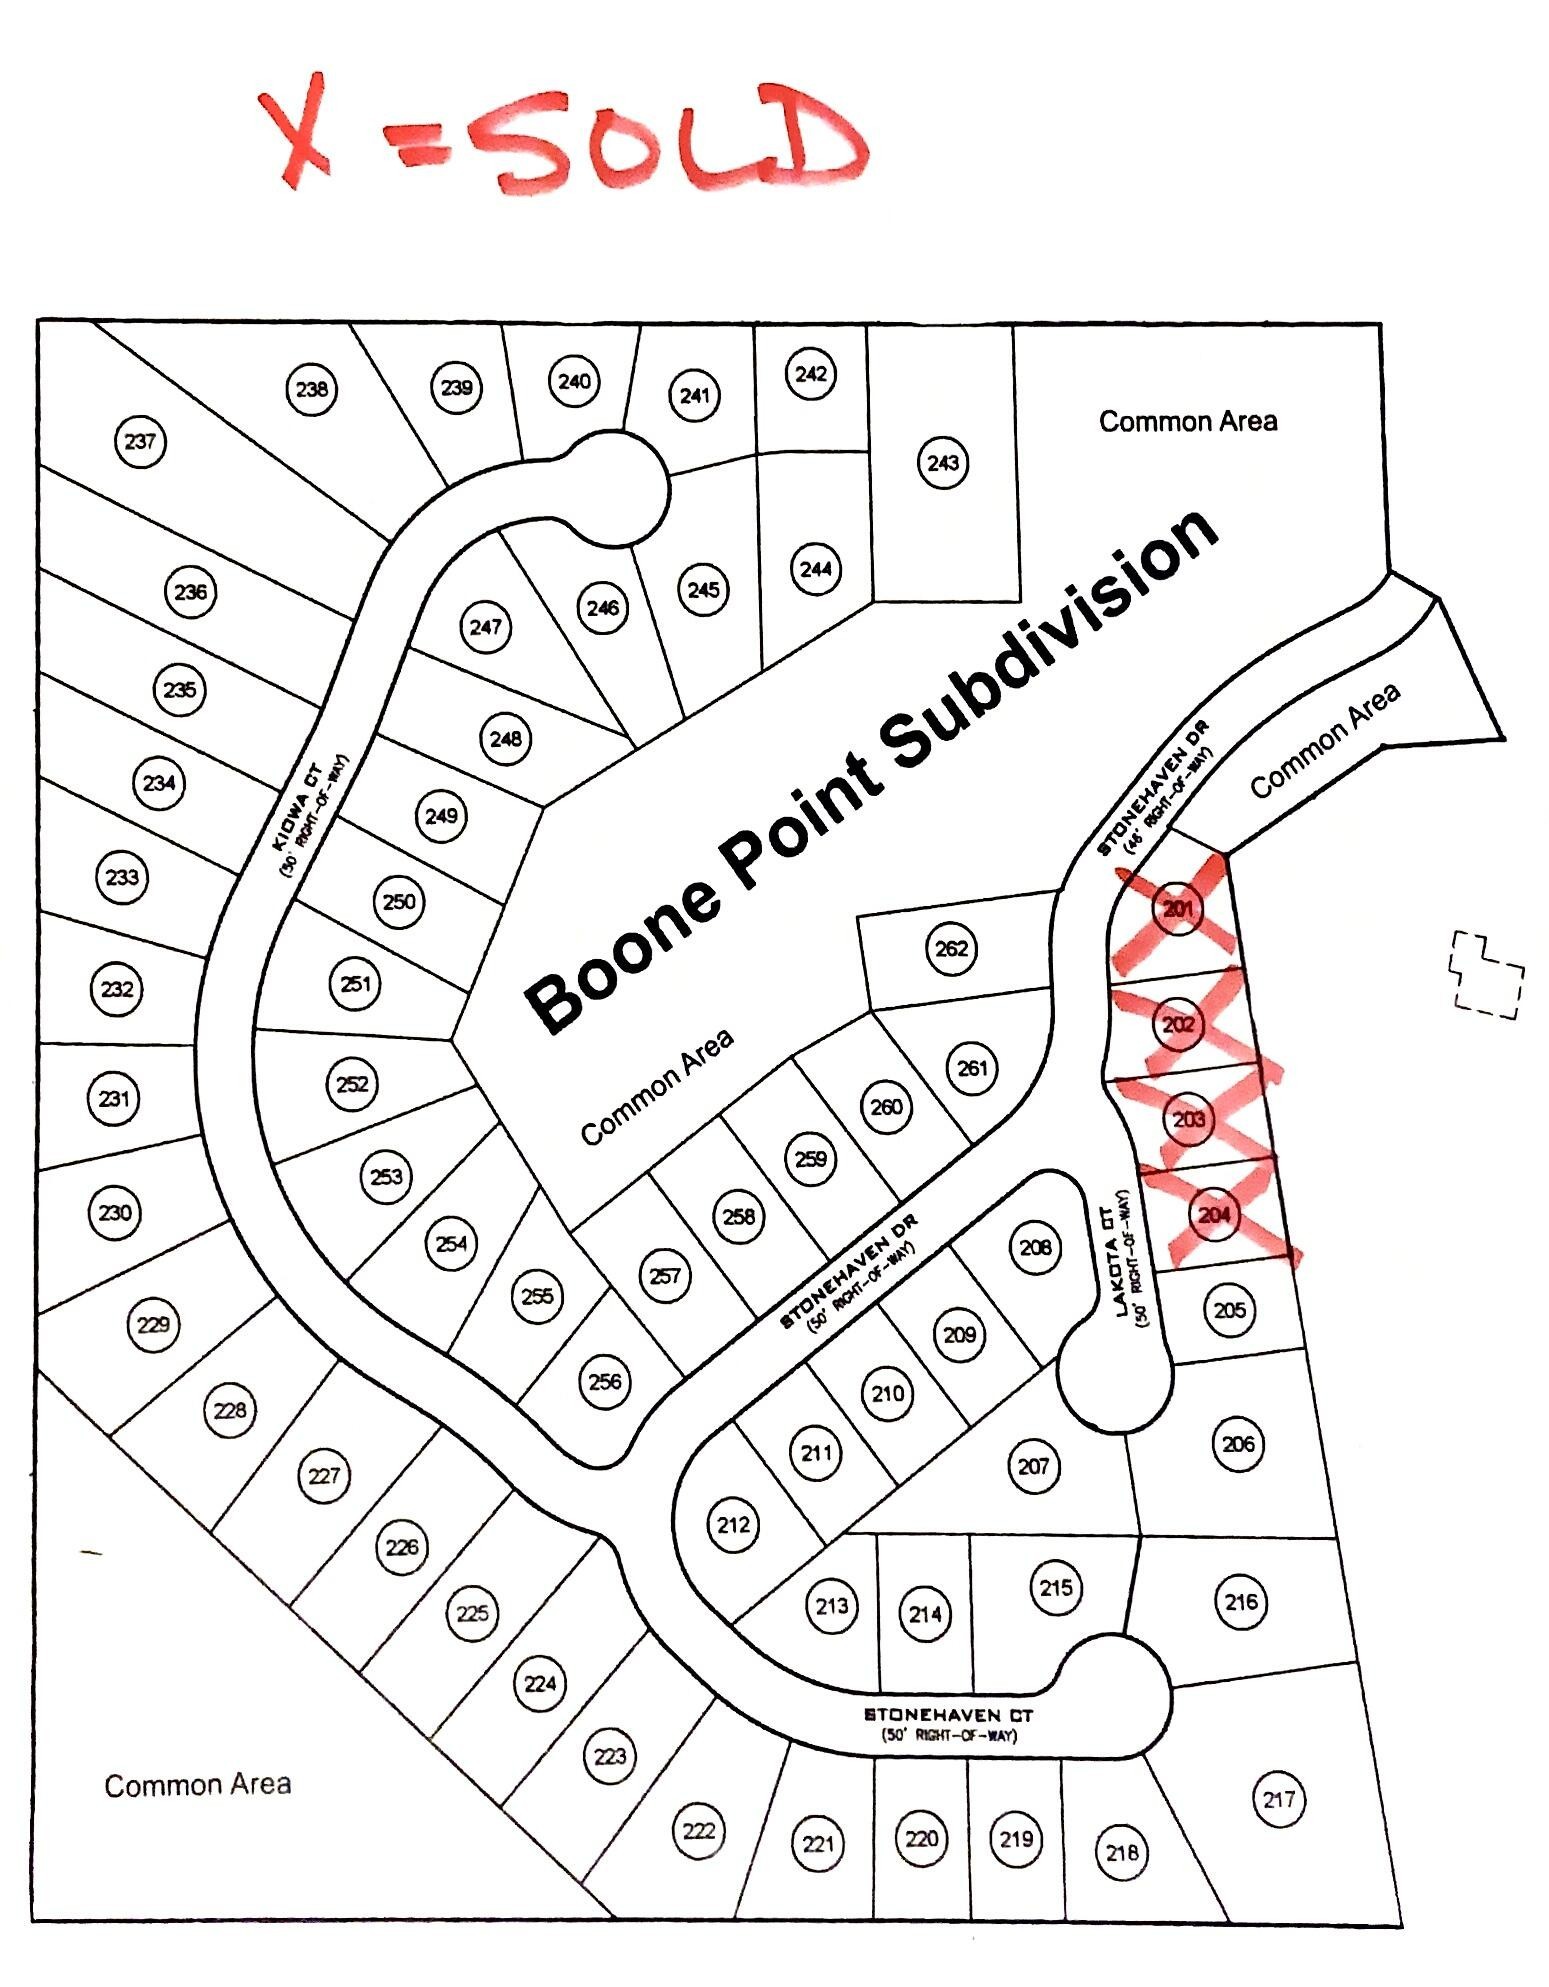 2. Boone Point Subdivision